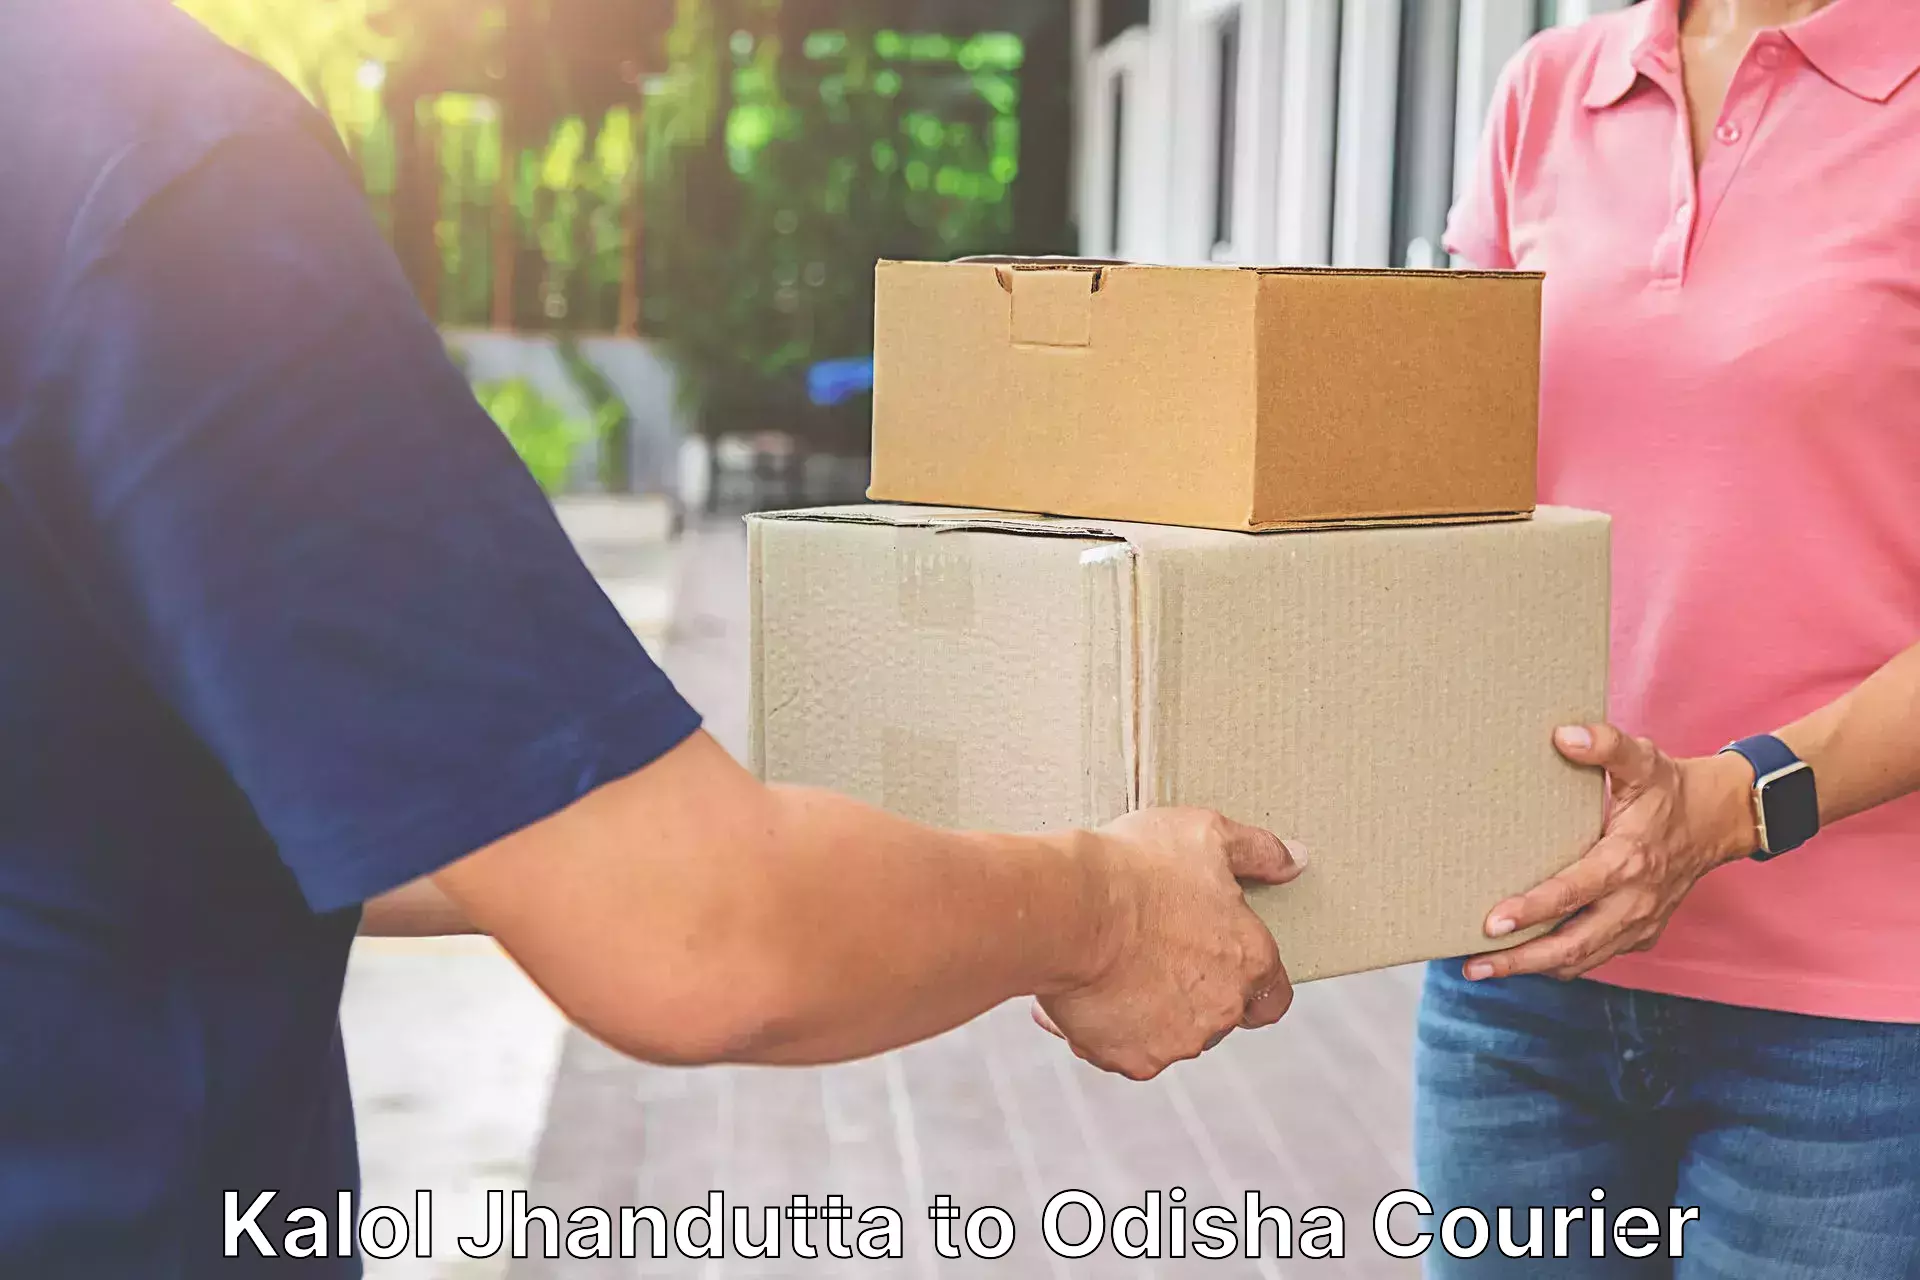 Full-service courier options Kalol Jhandutta to Odisha